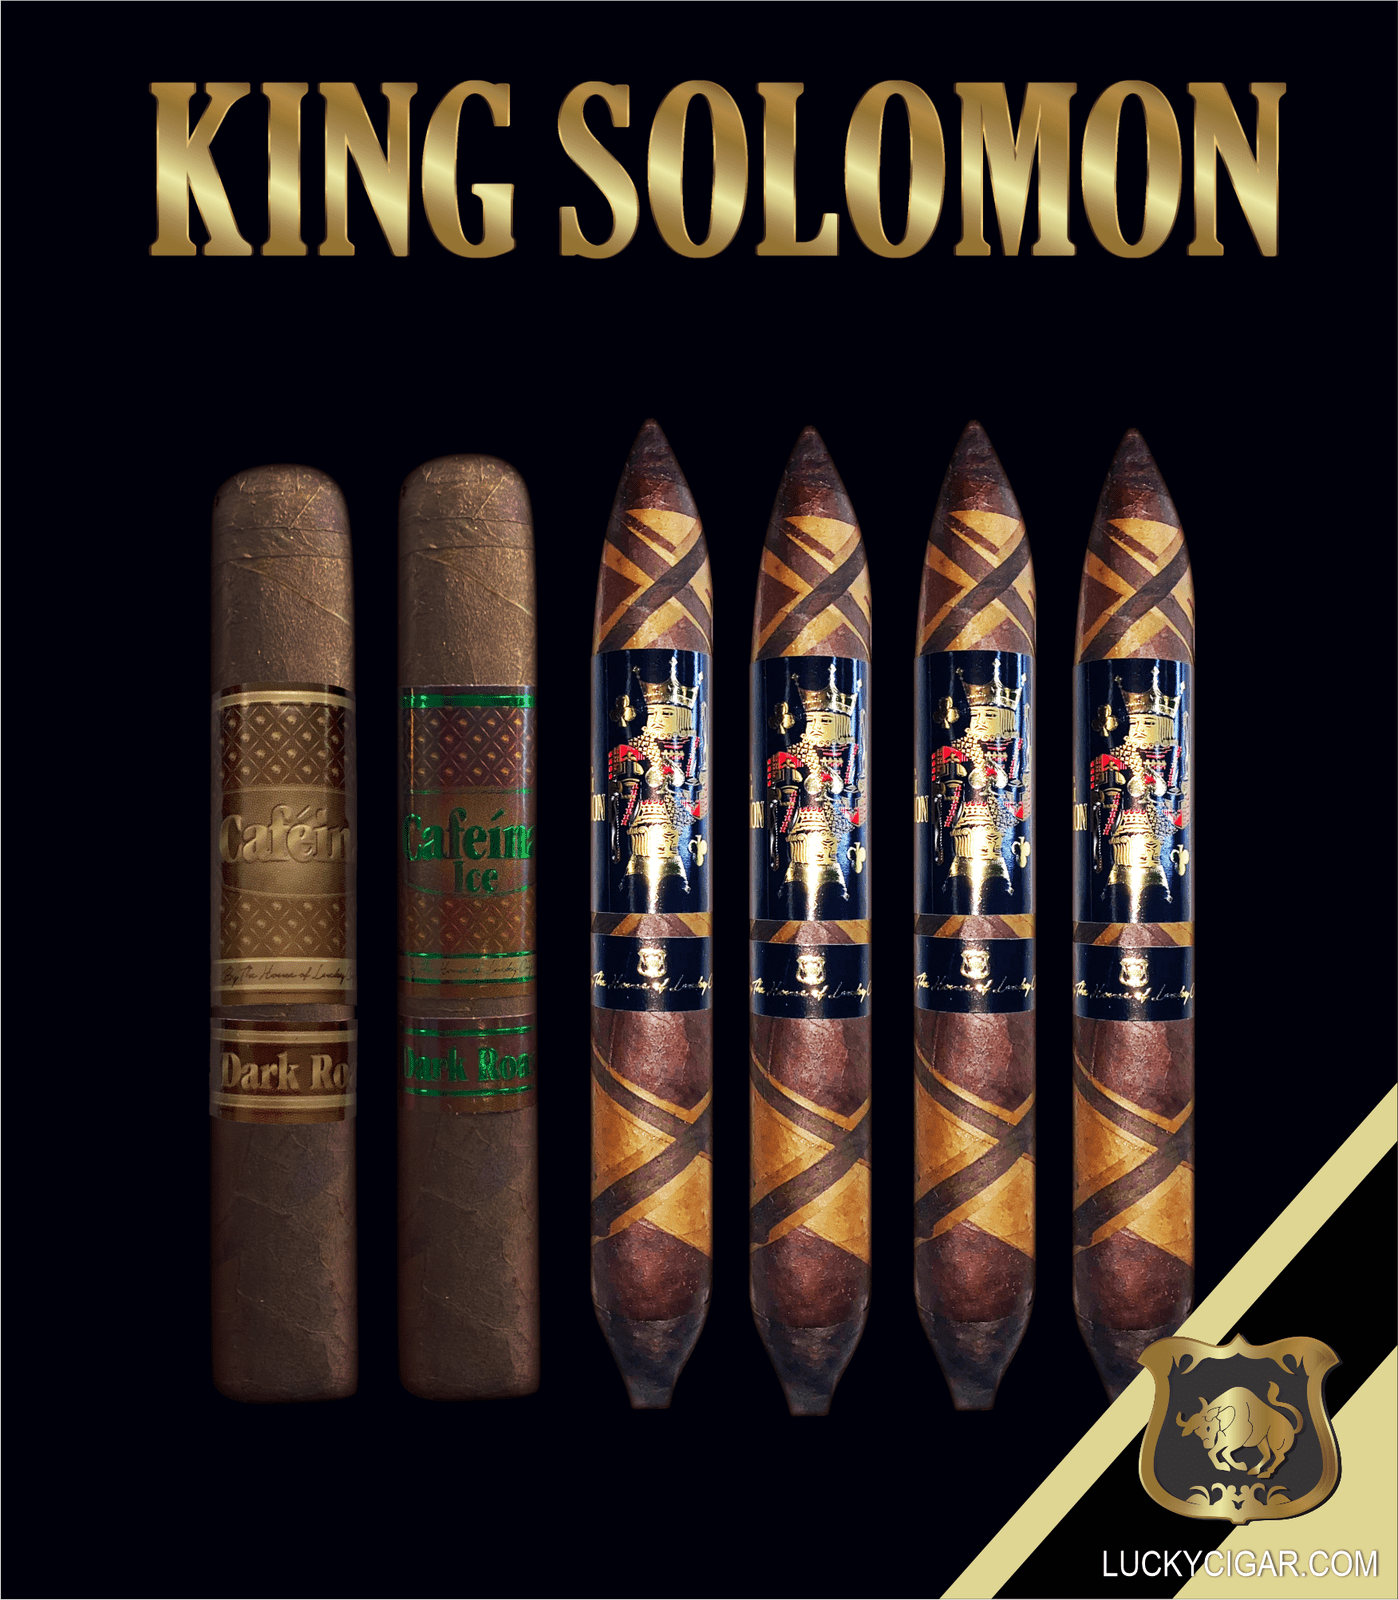 From The King Solomon Series: 4 Solomon 7x60 Cigars, 1 Cafeina Dark 5x58, 1 Cafeina Ice 5x58